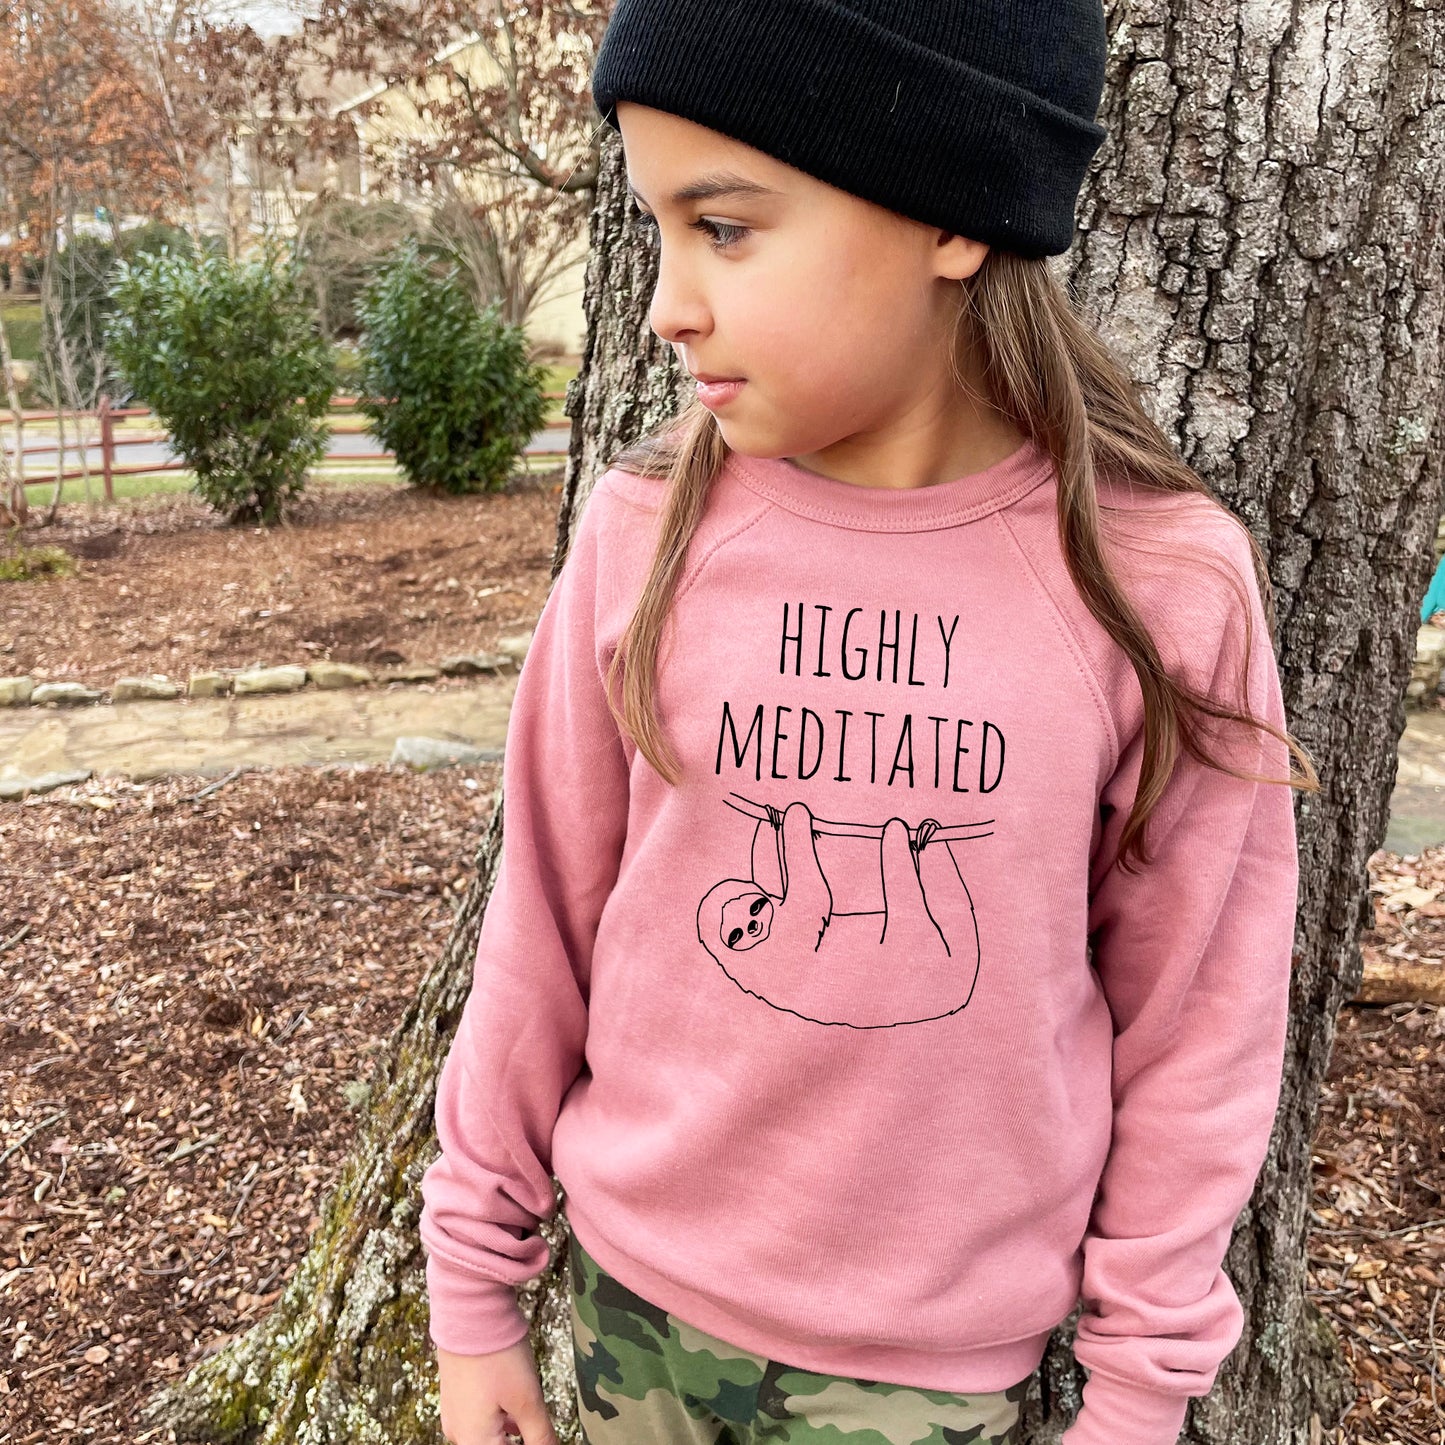 Highly Meditated (Sloth) - Kid's Sweatshirt - Heather Gray or Mauve